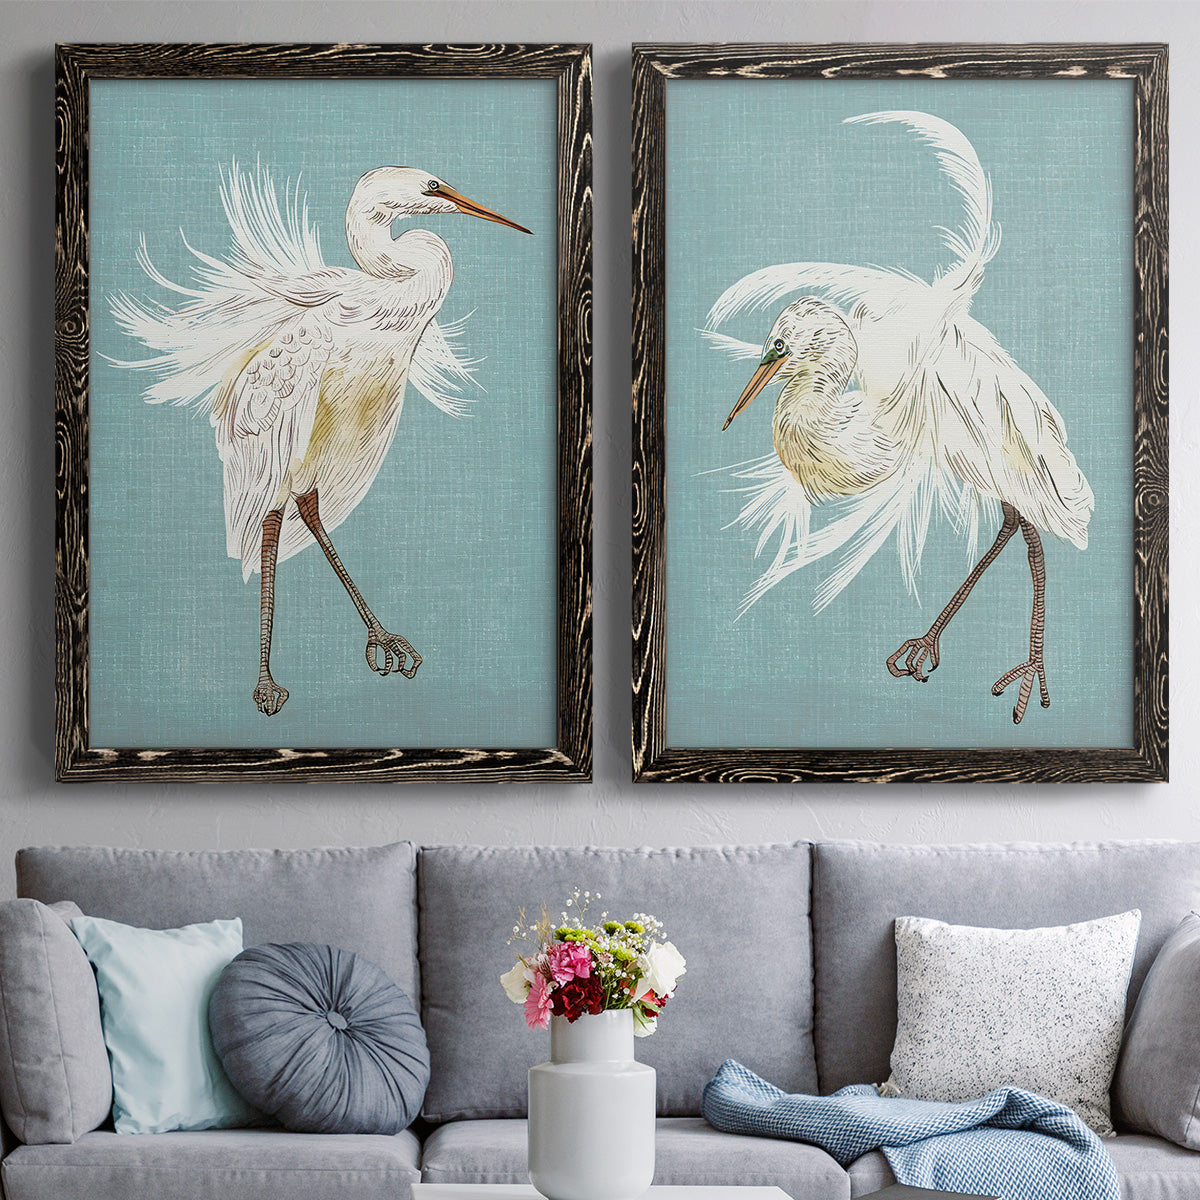 Heron Plumage III - Premium Framed Canvas 2 Piece Set - Ready to Hang